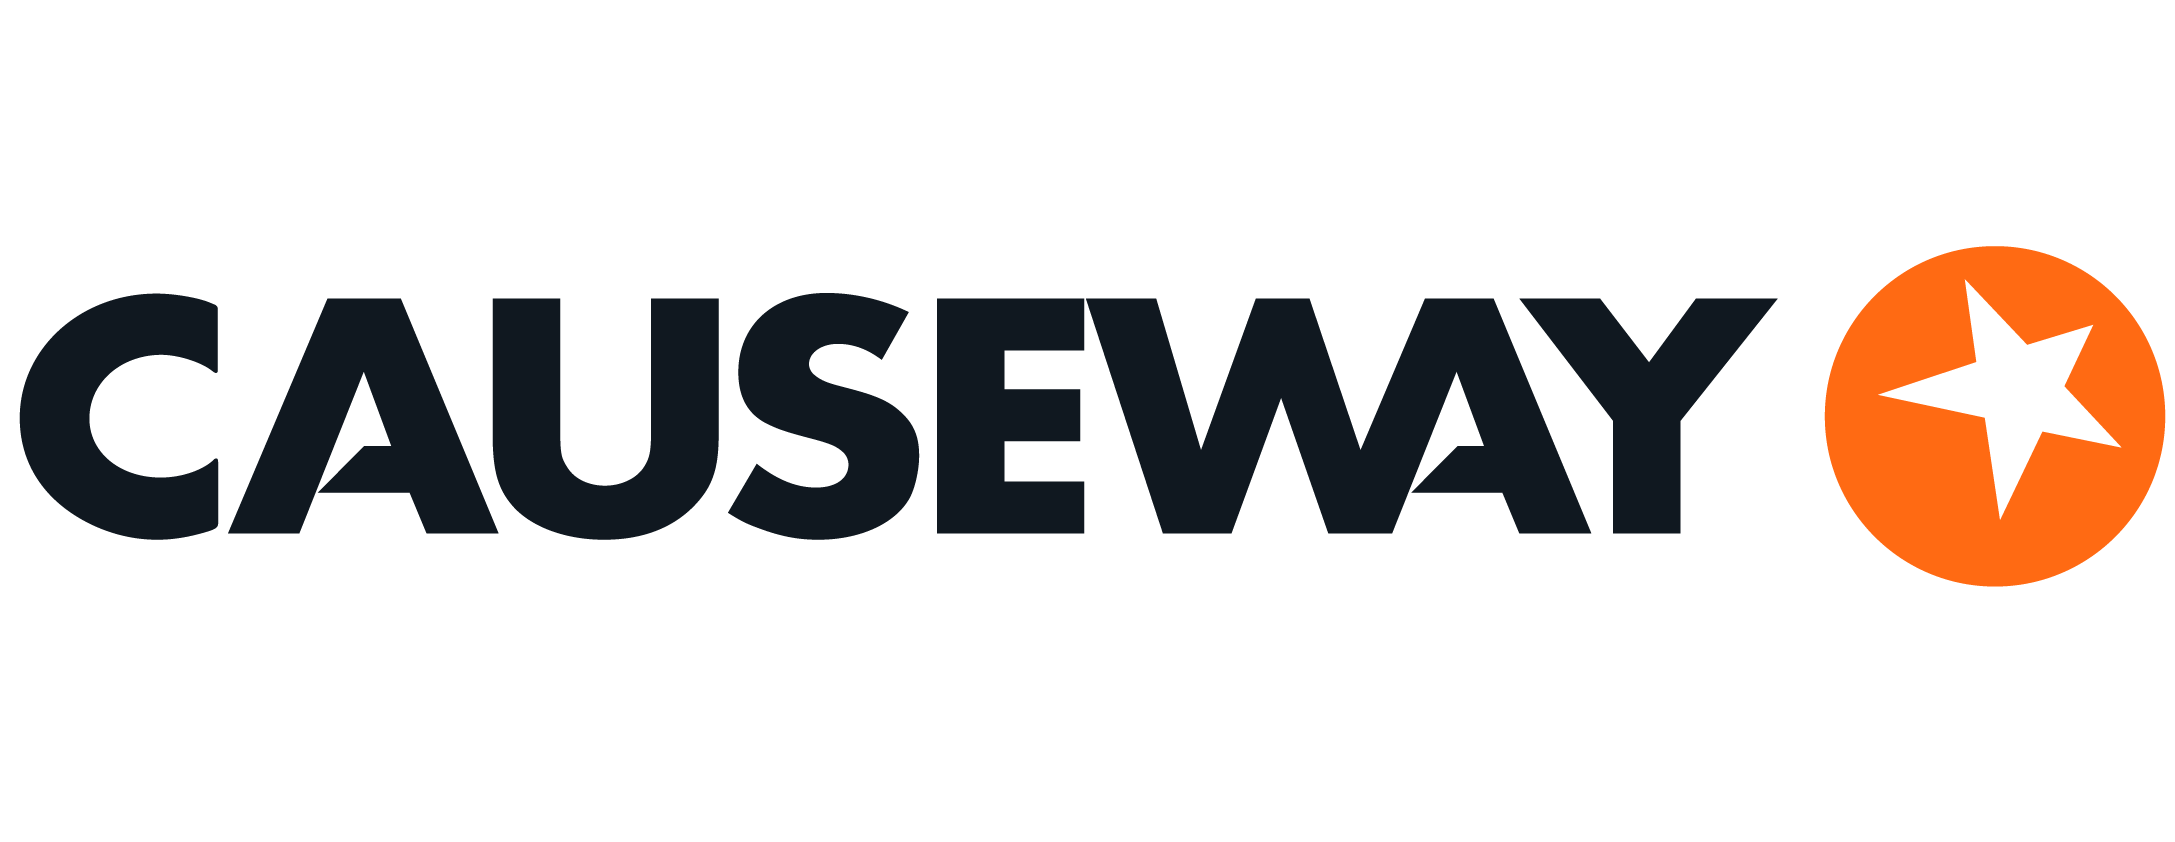 Causeway_logo-V2